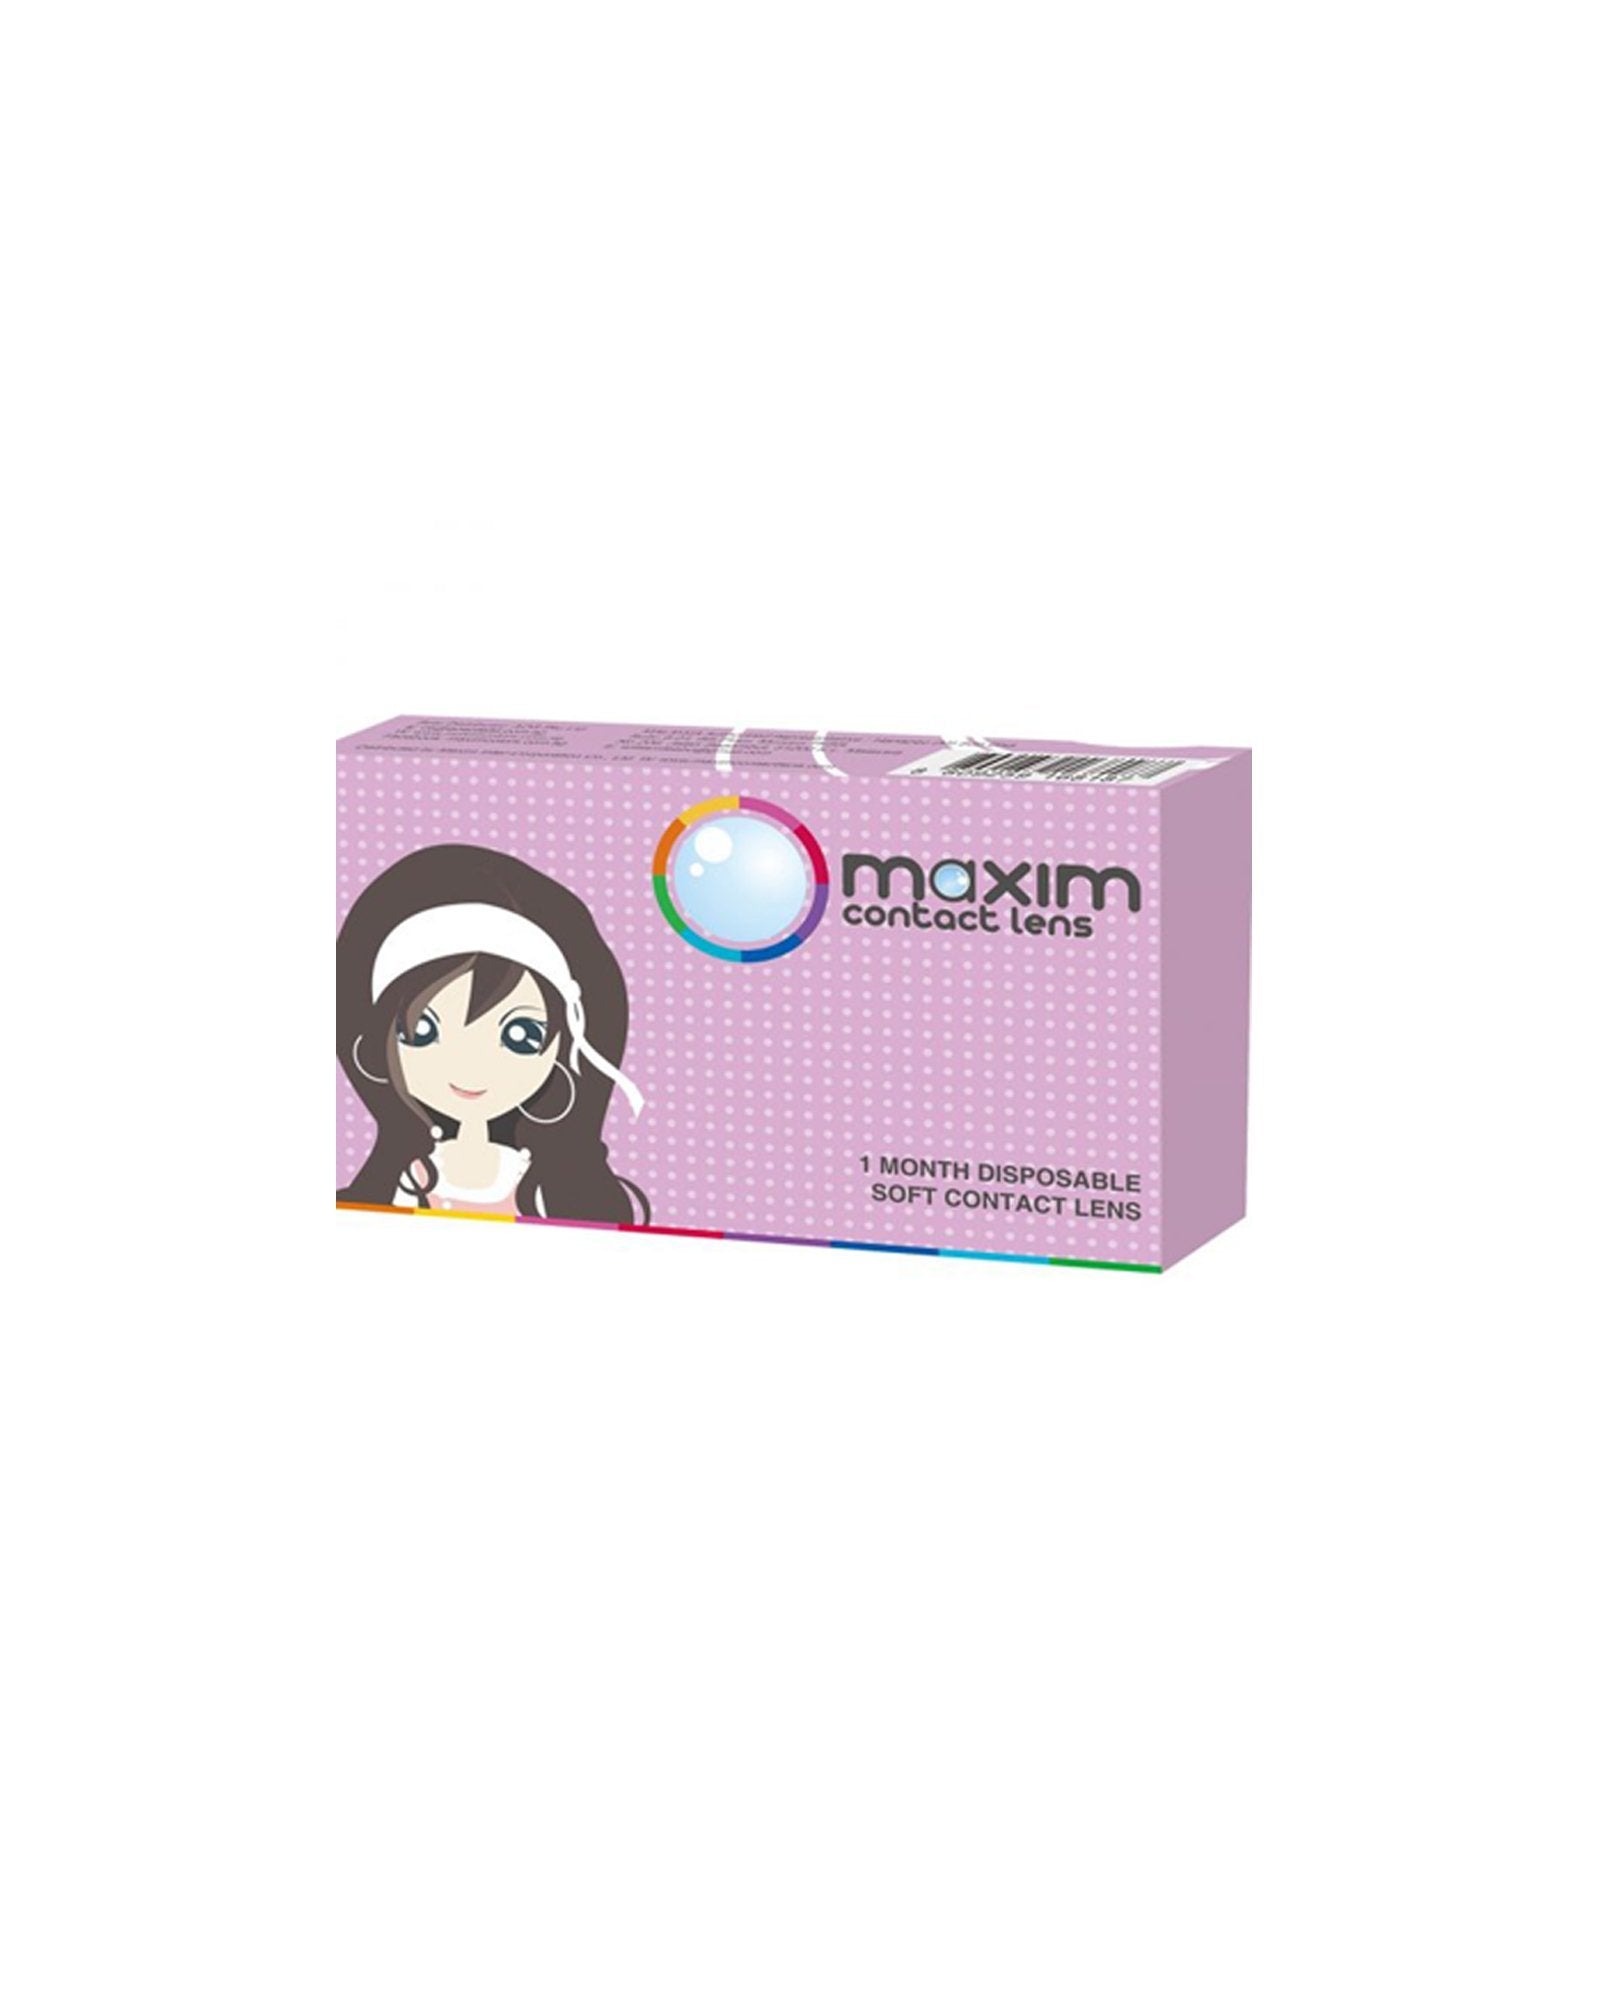 Maxim Big and Natural Eyes (Violet Box) x 4 boxes - Maxim - lenscottage